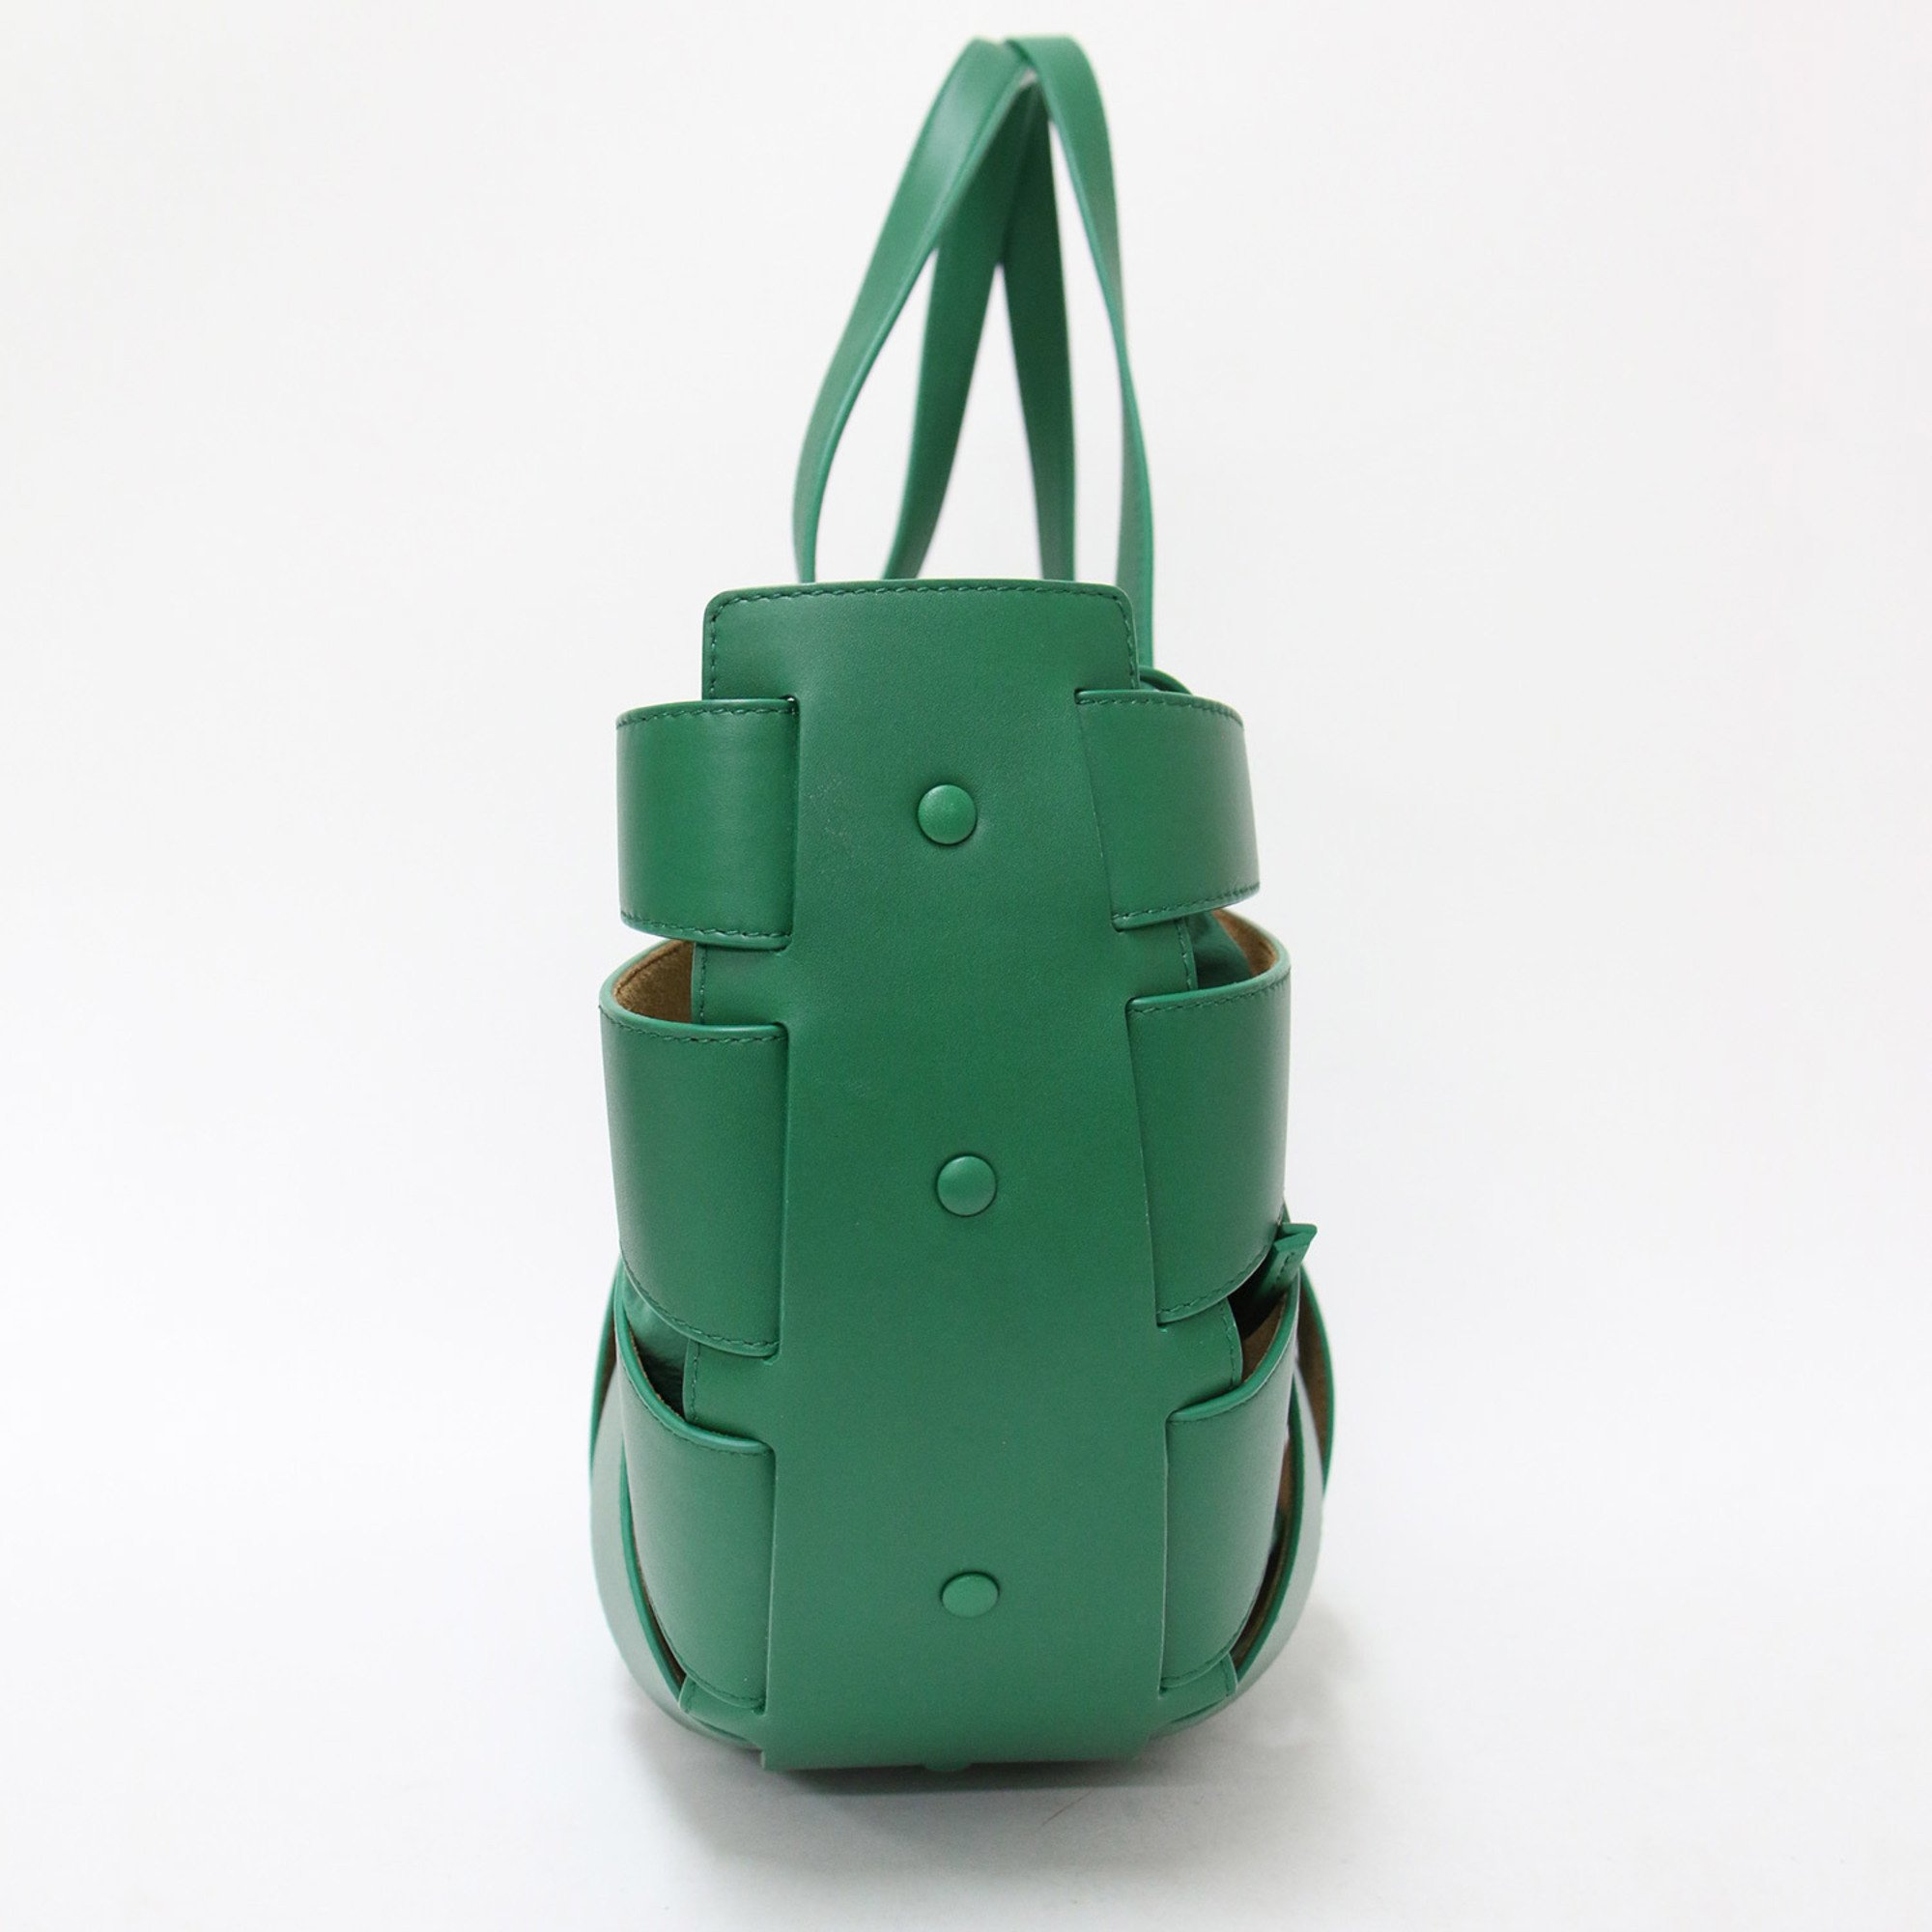 BOTTEGA VENETA Bottega Veneta Bag Tote Green The Shell Medium Leather Drawstring Included Made in Italy